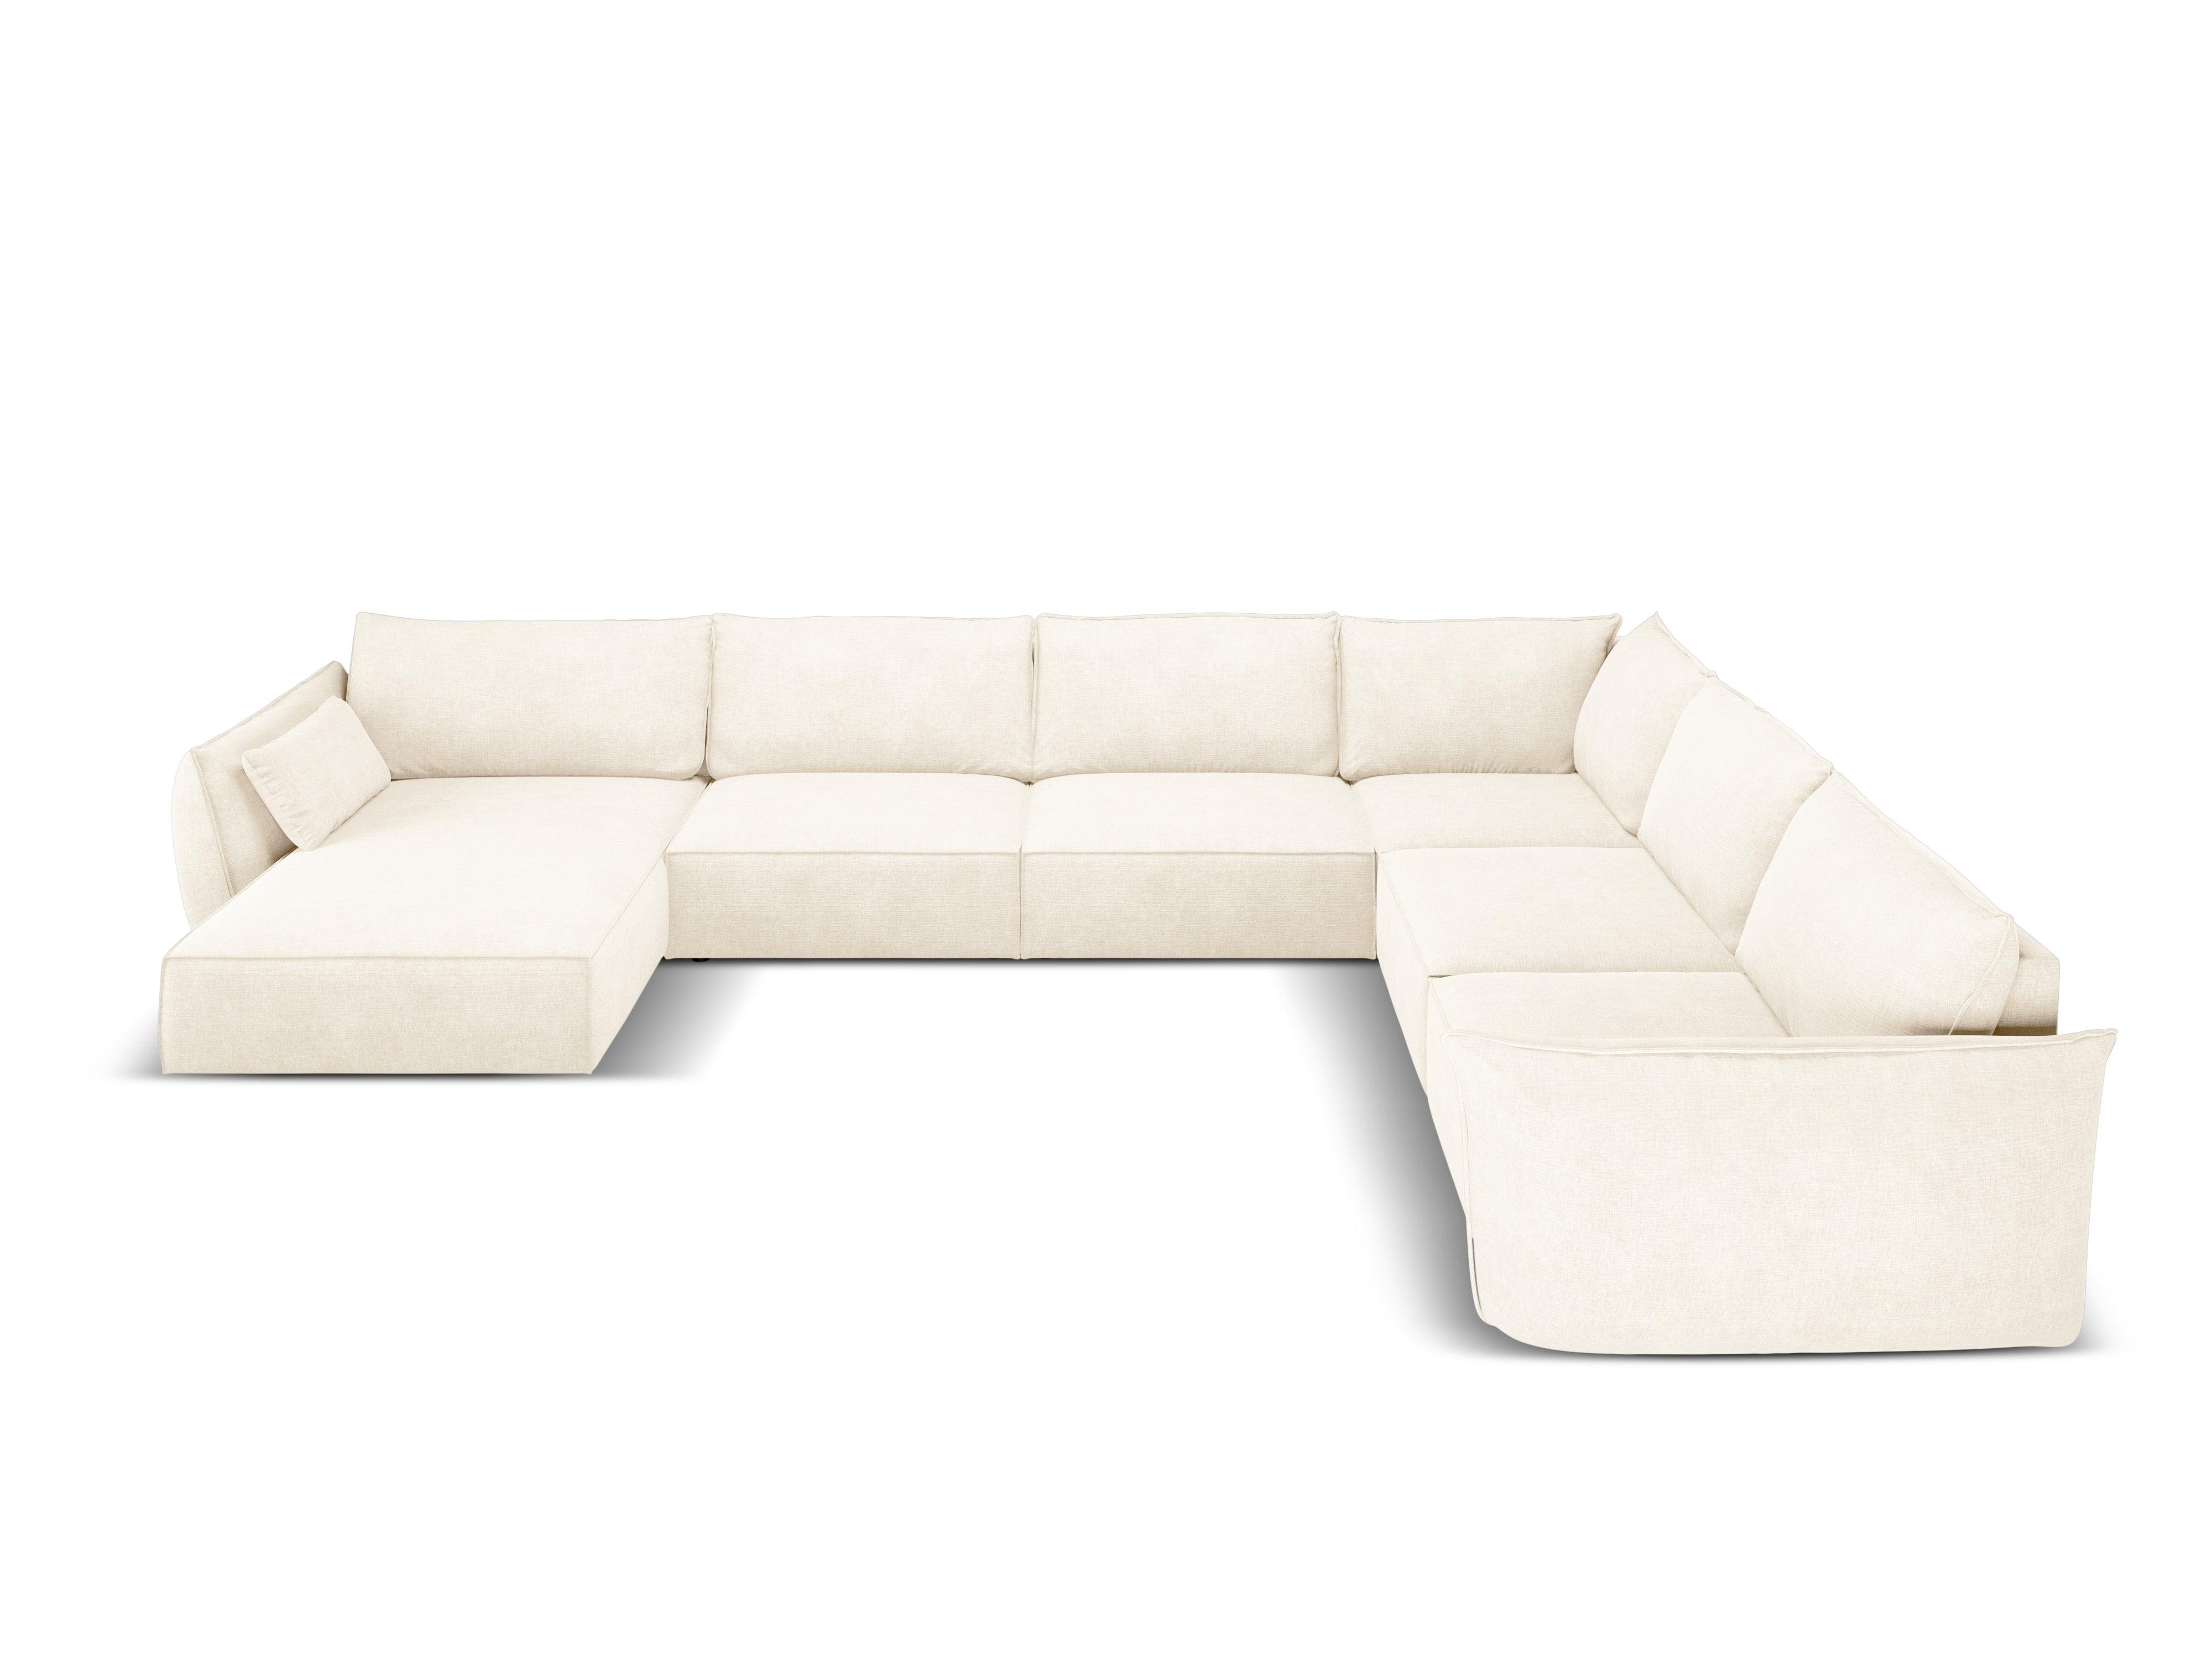 Panoramic Right Corner Sofa, "Vanda", 8 Seats, 384x284x85
Made in Europe, Mazzini Sofas, Eye on Design